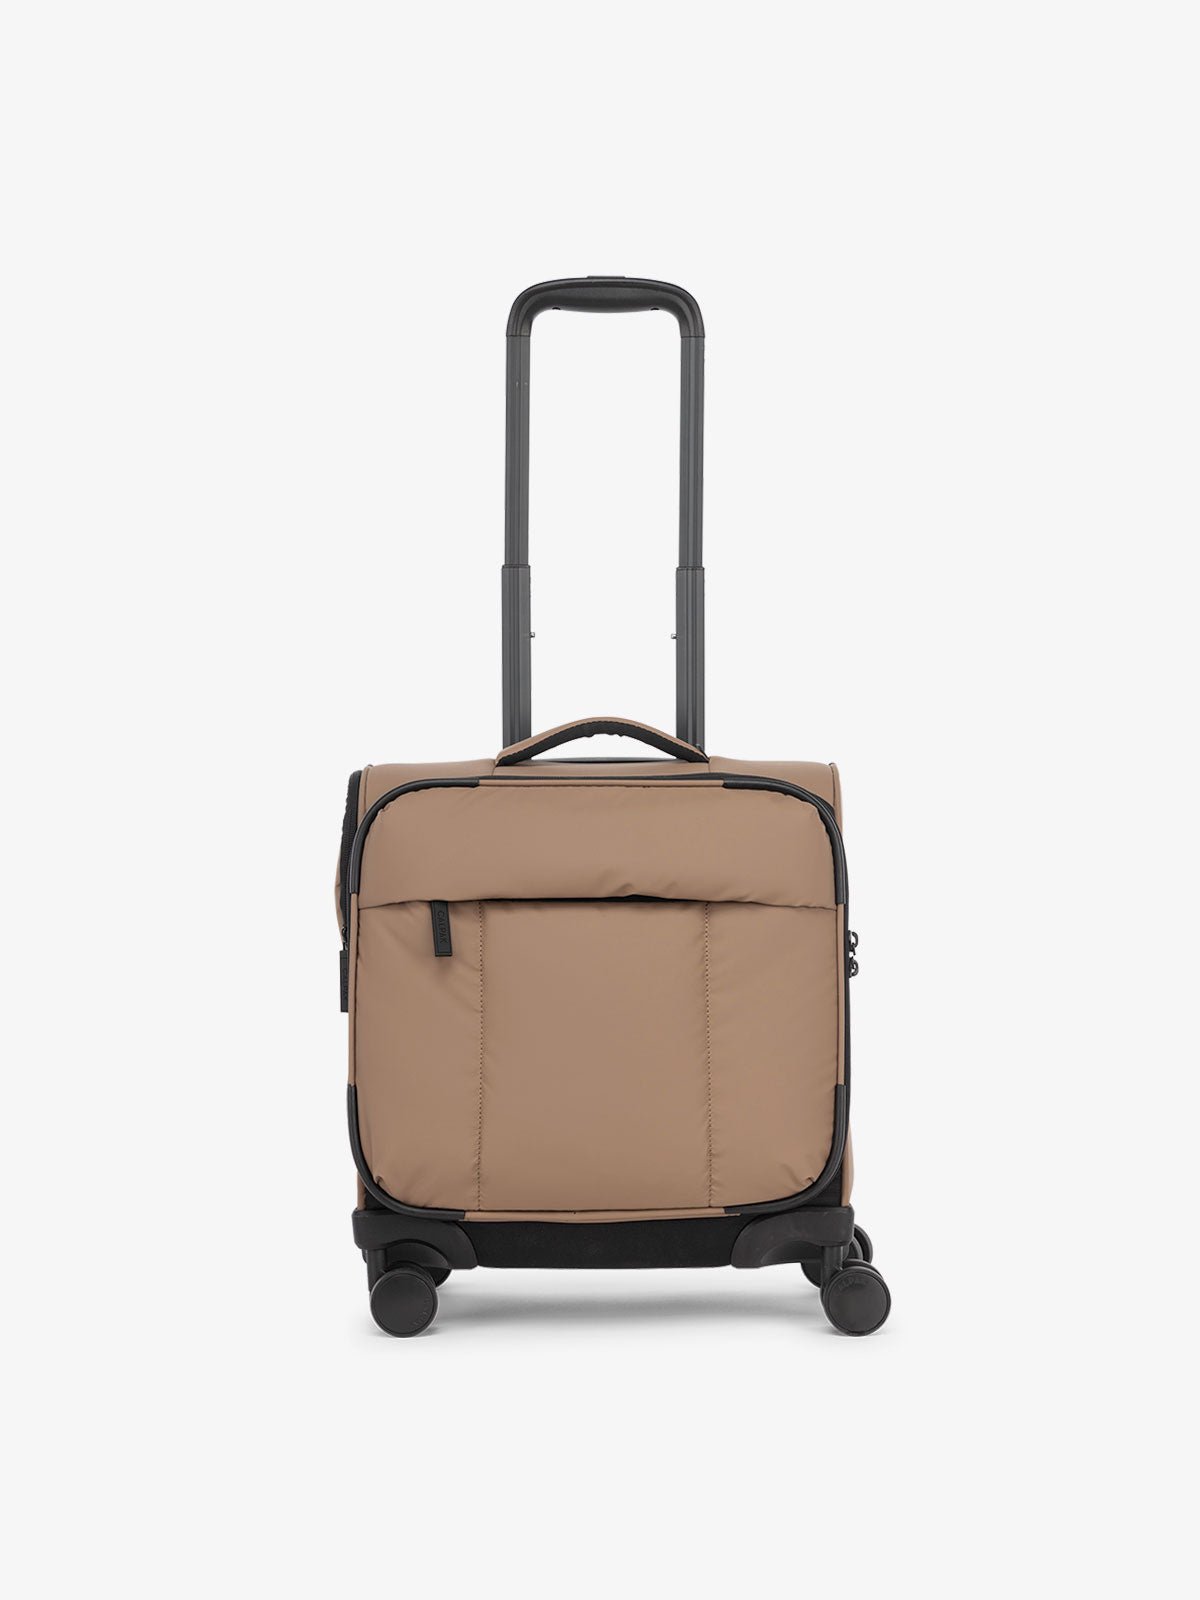 CALPAK Luka mini soft carry-on luggage in chocolate